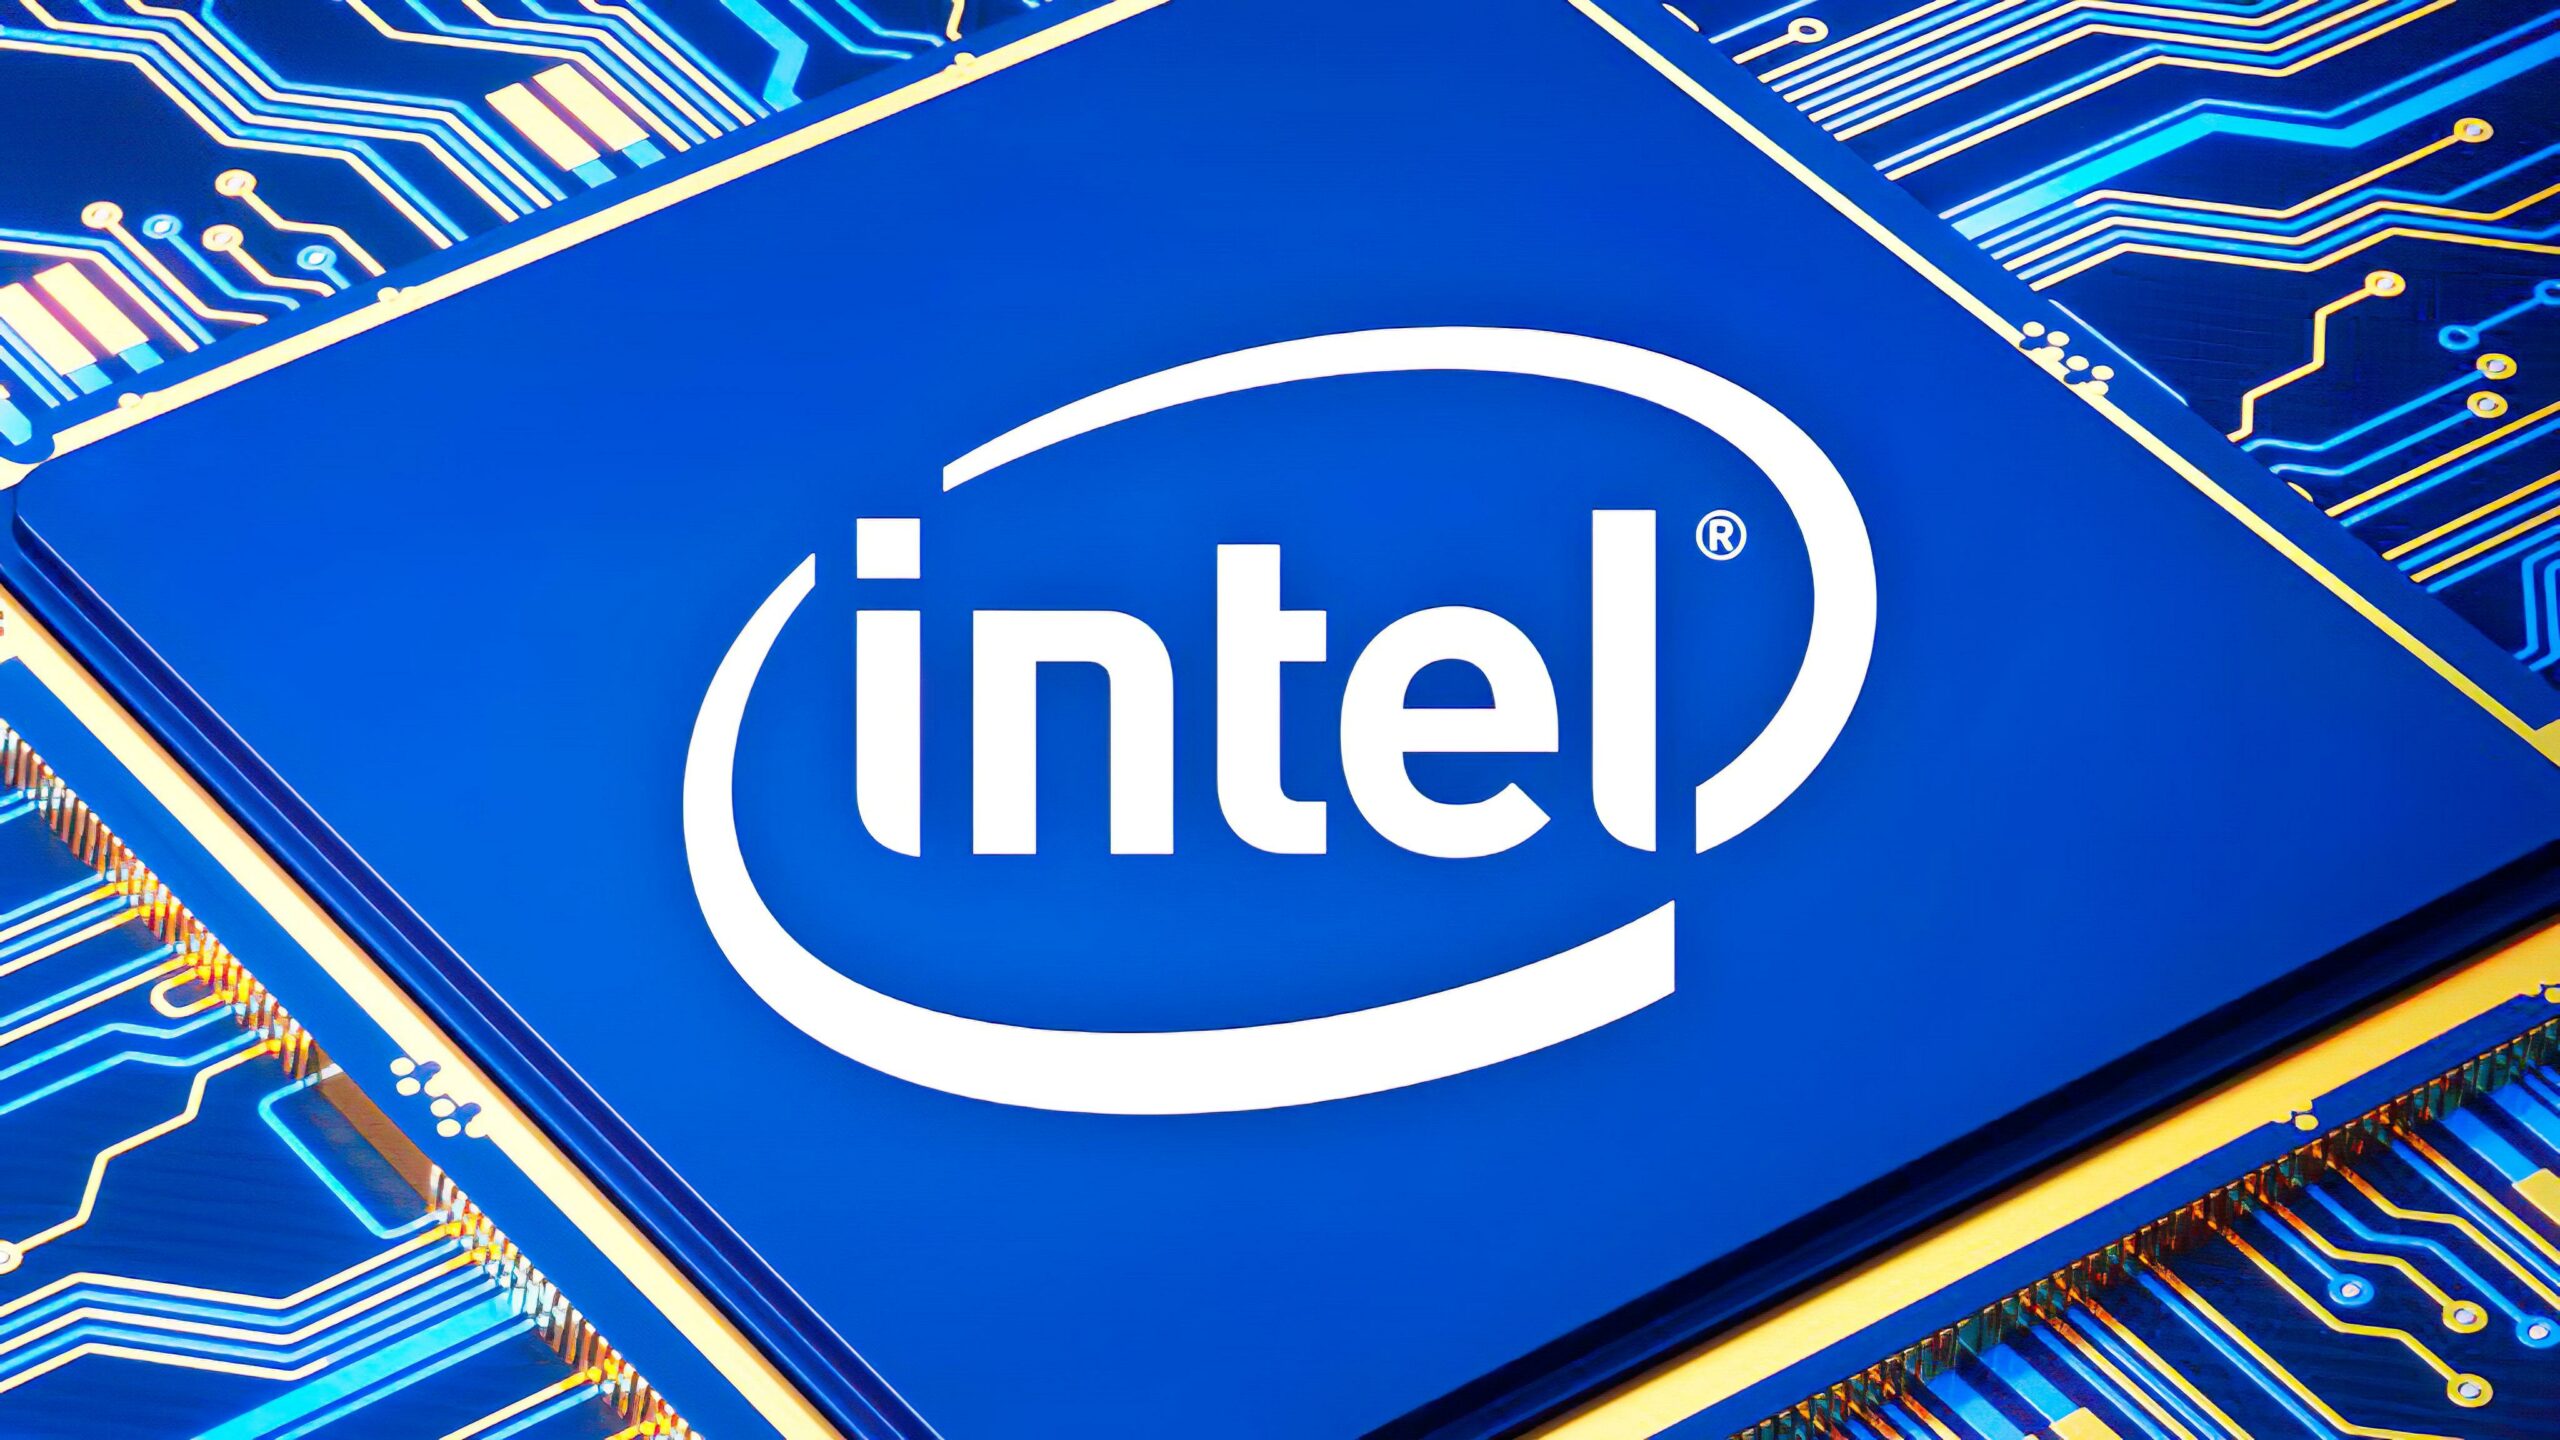 Модели интел. Intel logo 2022. Intel Core i7-1165g. Интел логотип 2021. Логотип процессора Интел.